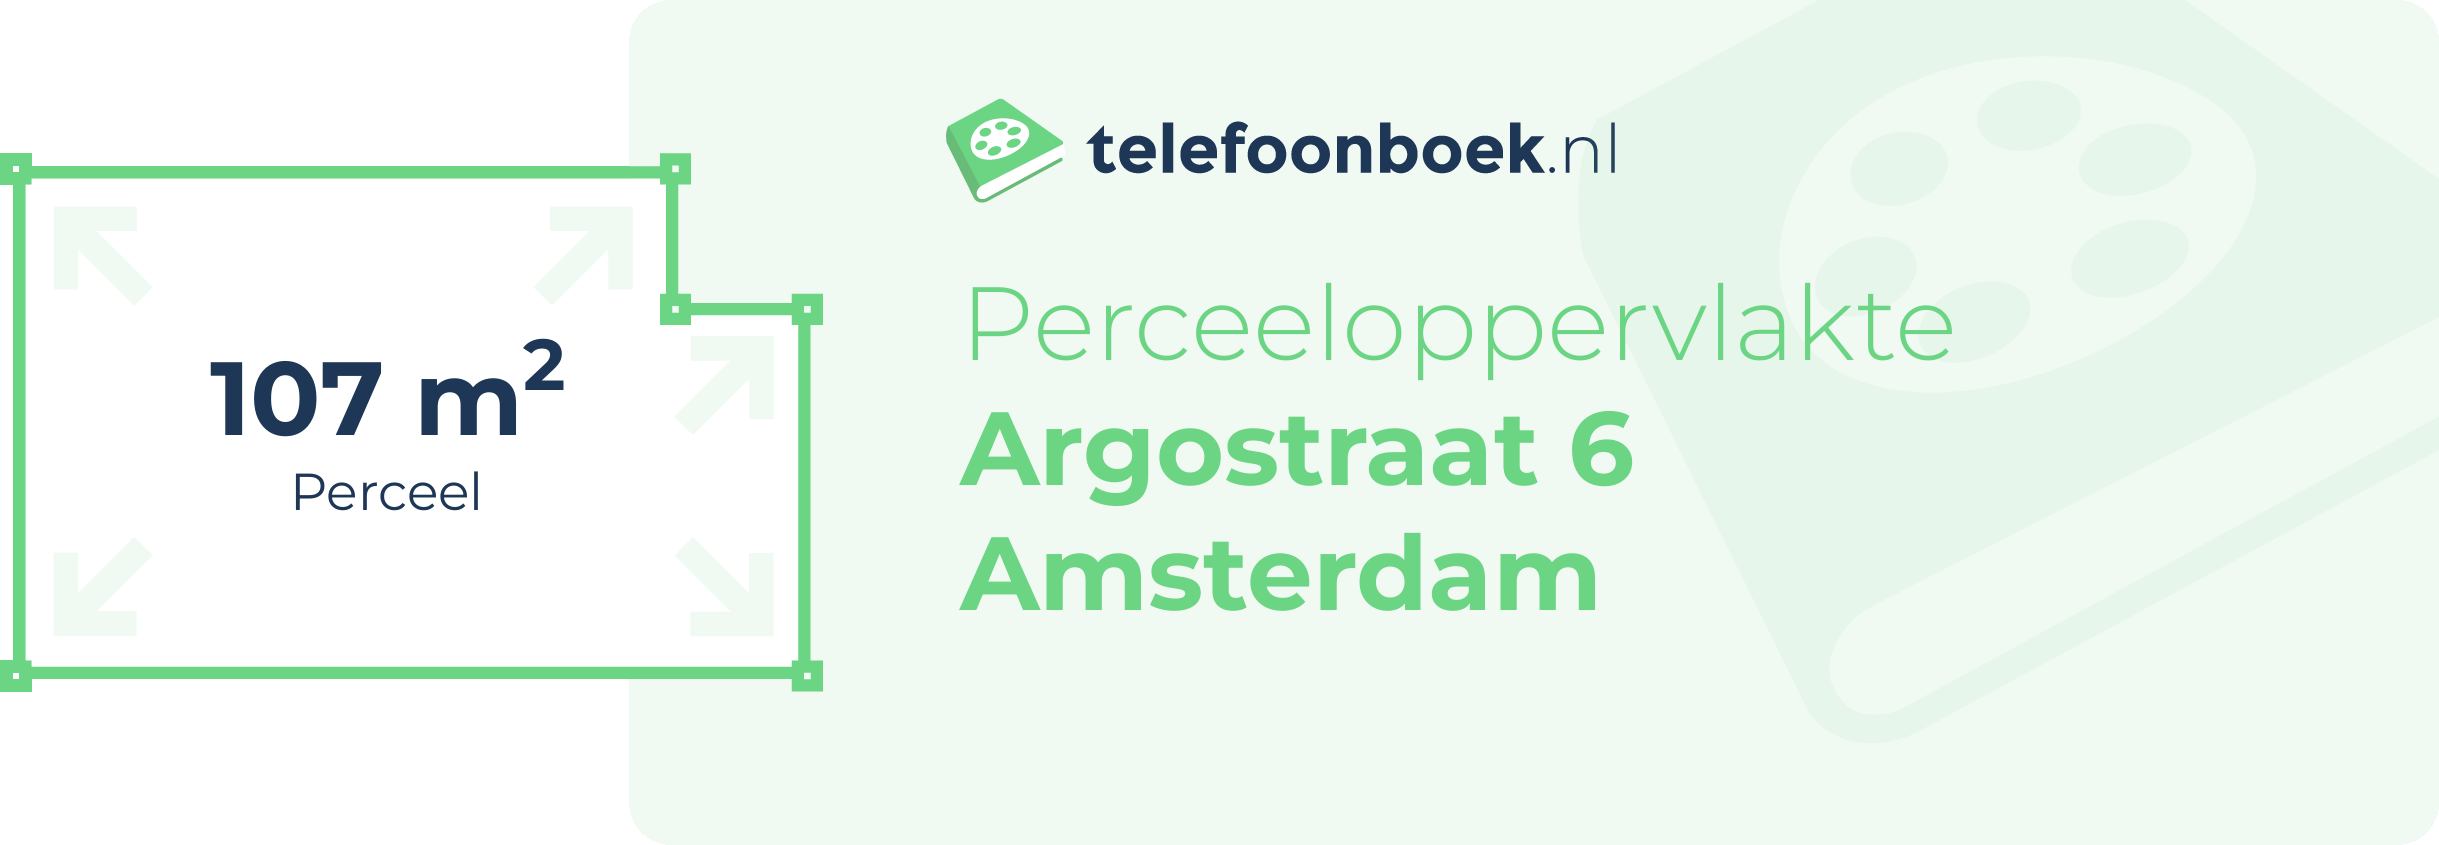 Perceeloppervlakte Argostraat 6 Amsterdam